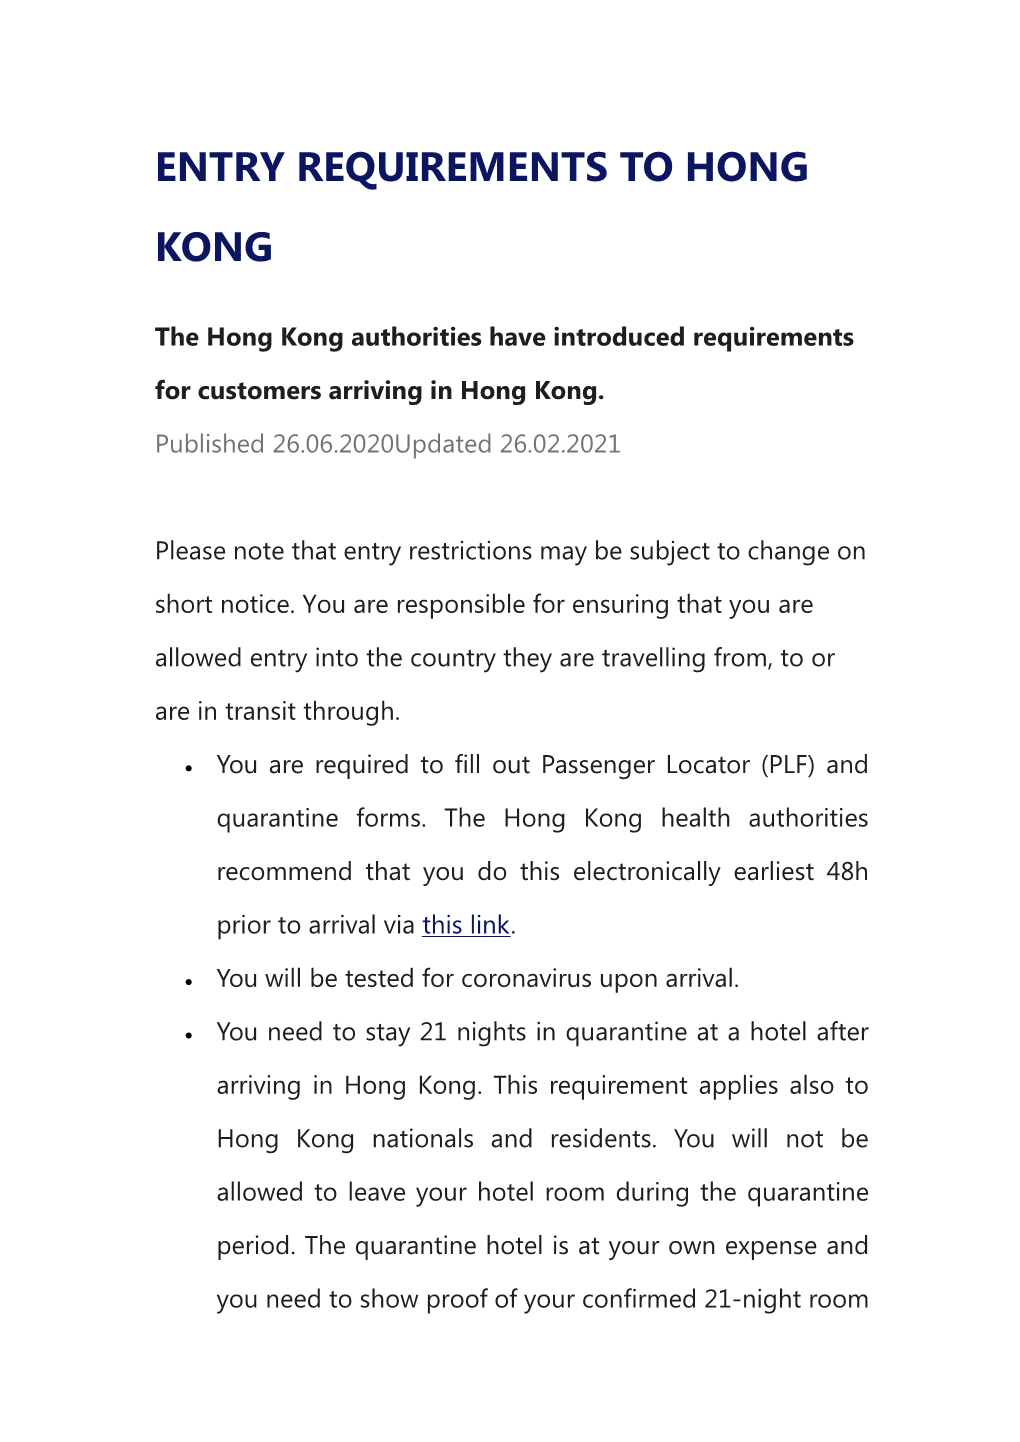 Entry Requirements to Hong Kong